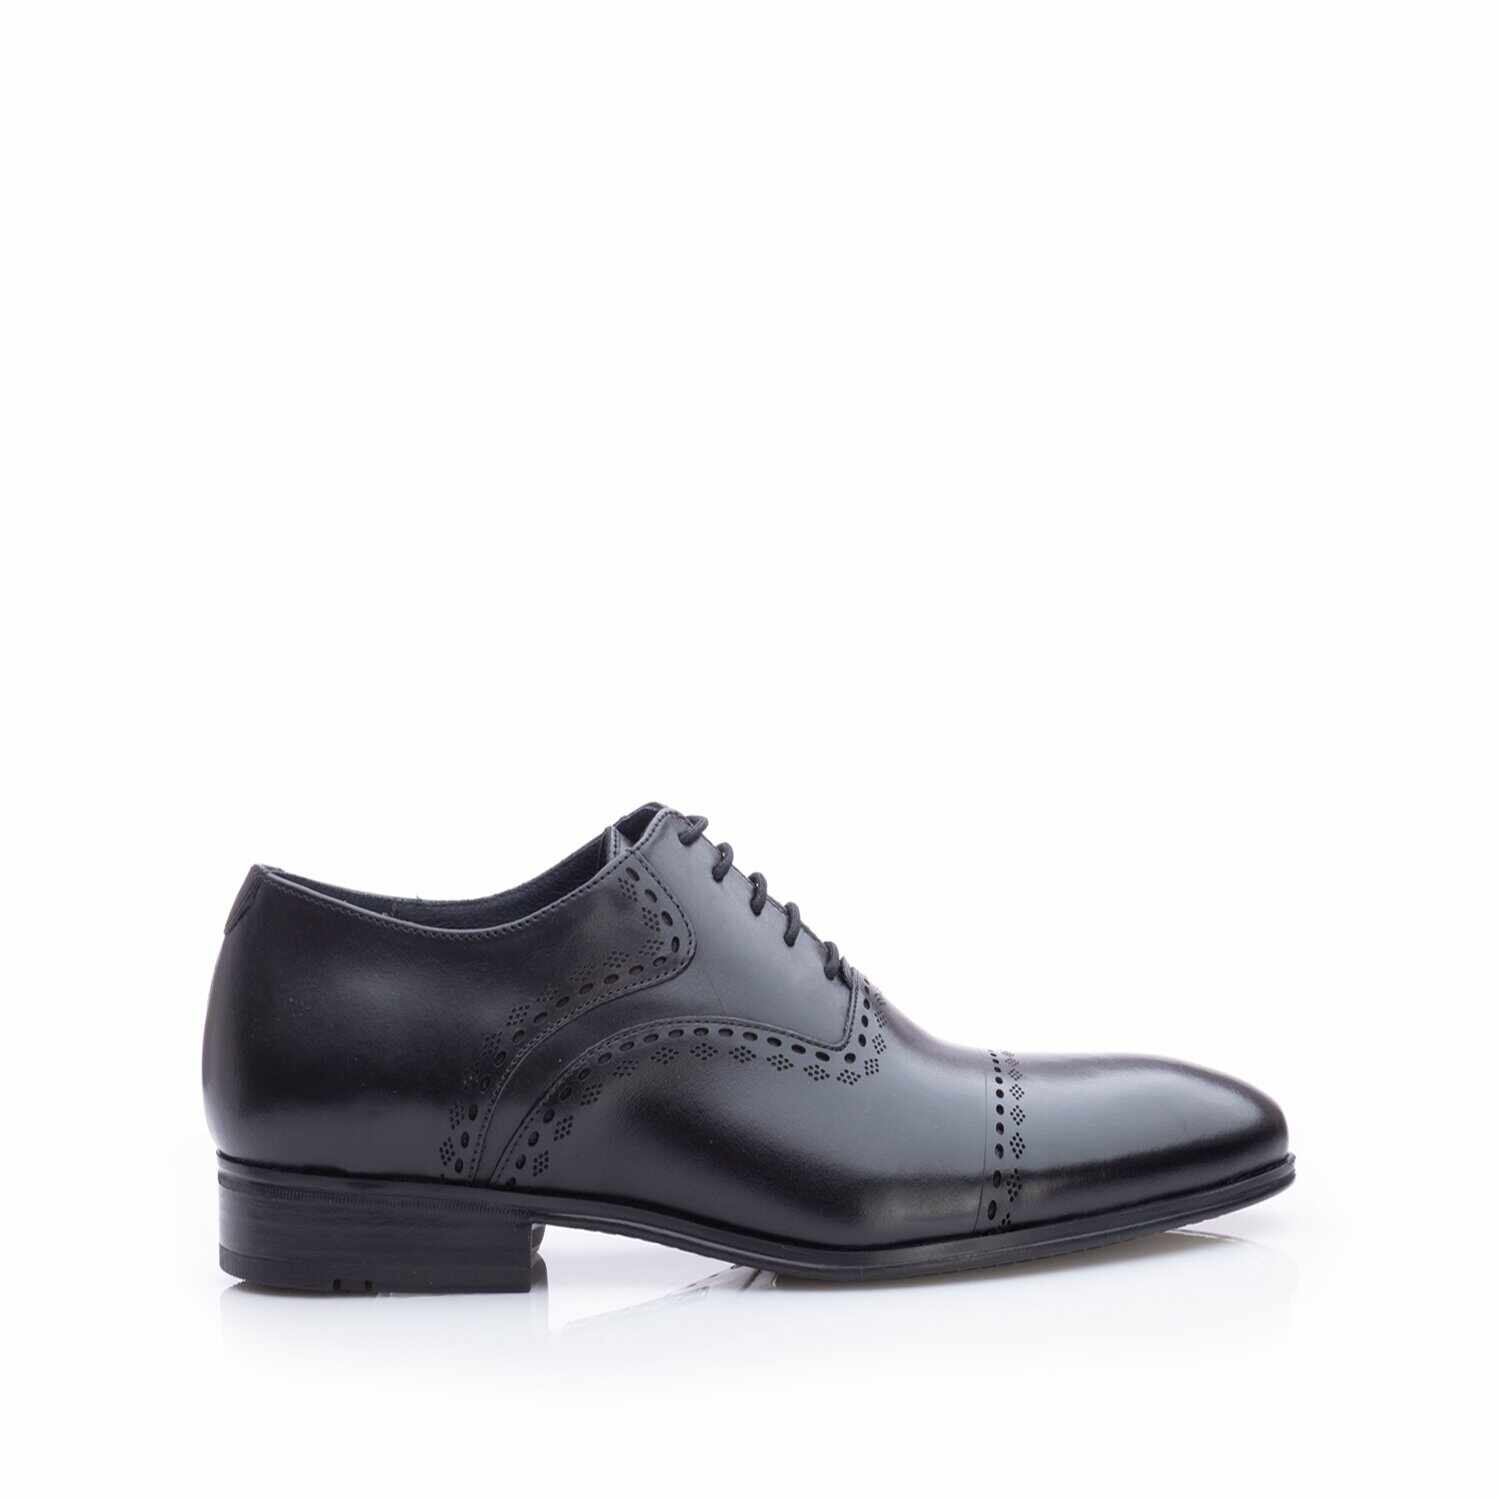 Pantofi eleganti barbati, Oxford din piele naturala, Leofex - 748 Negru box